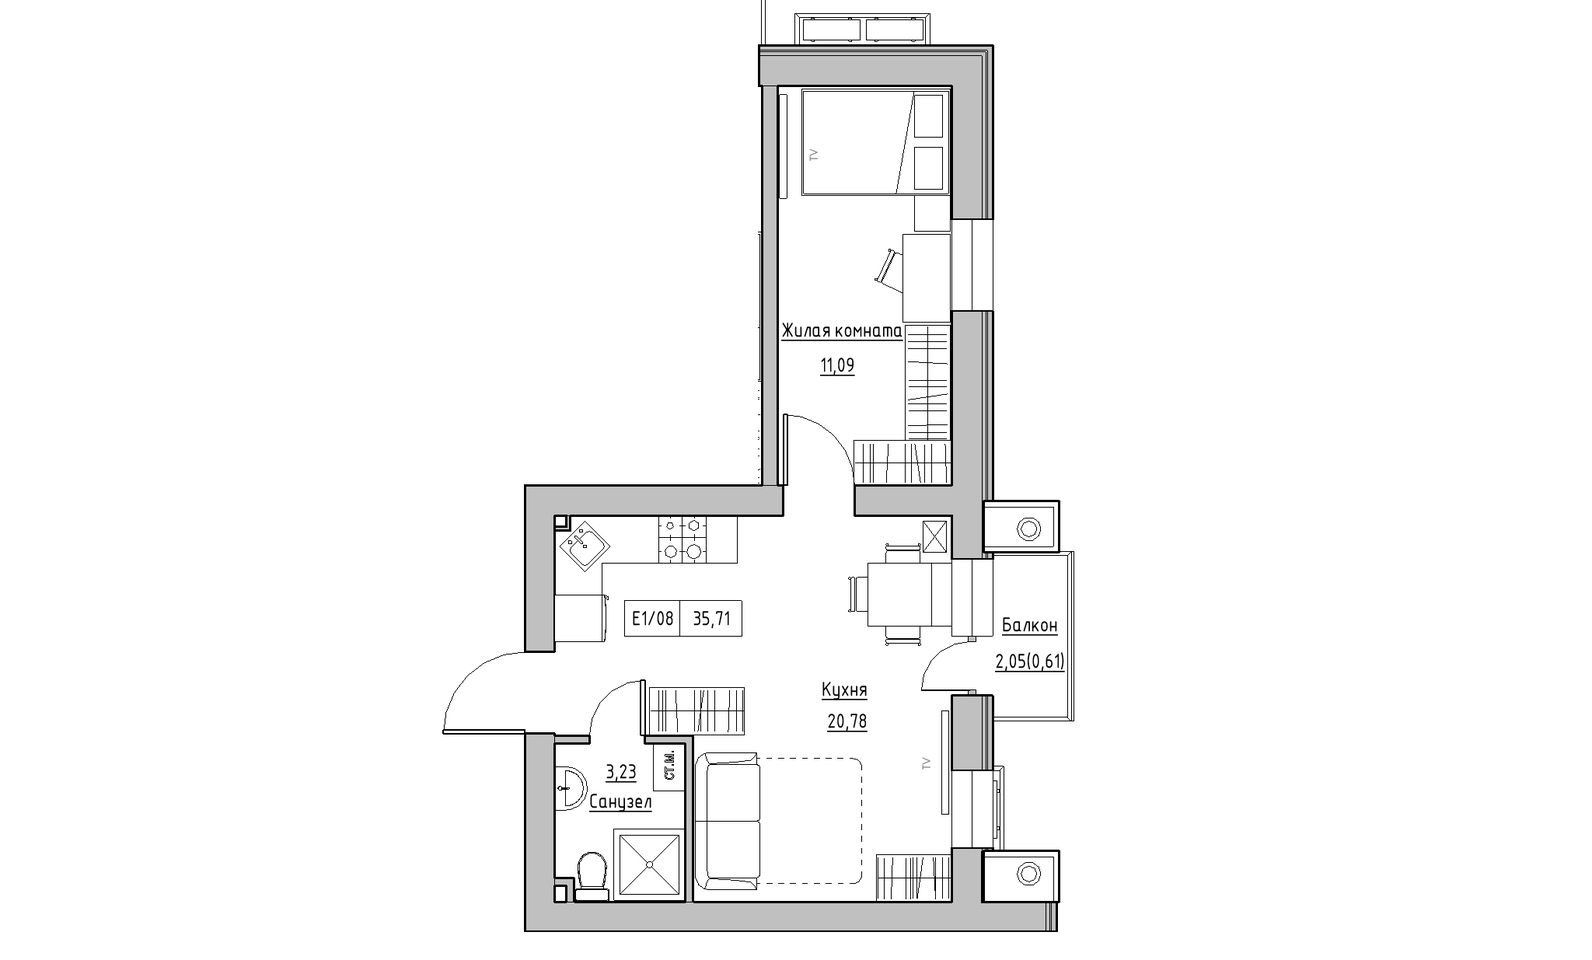 Planning 1-rm flats area 35.71m2, KS-014-04/0009.